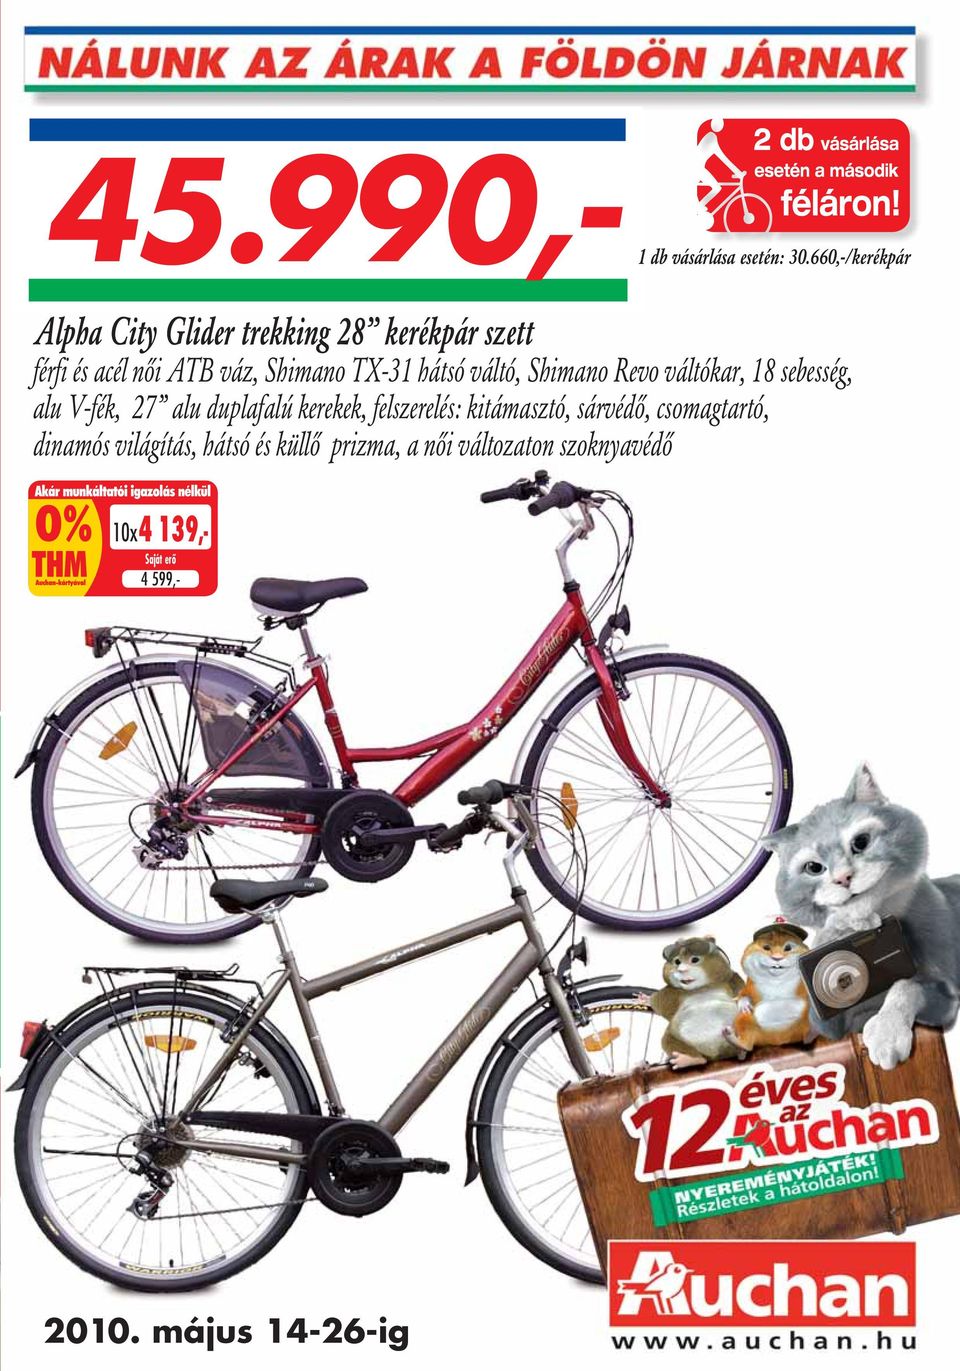 45.990,- Alpha City Glider trekking 28 kerékpár szett - PDF Free Download